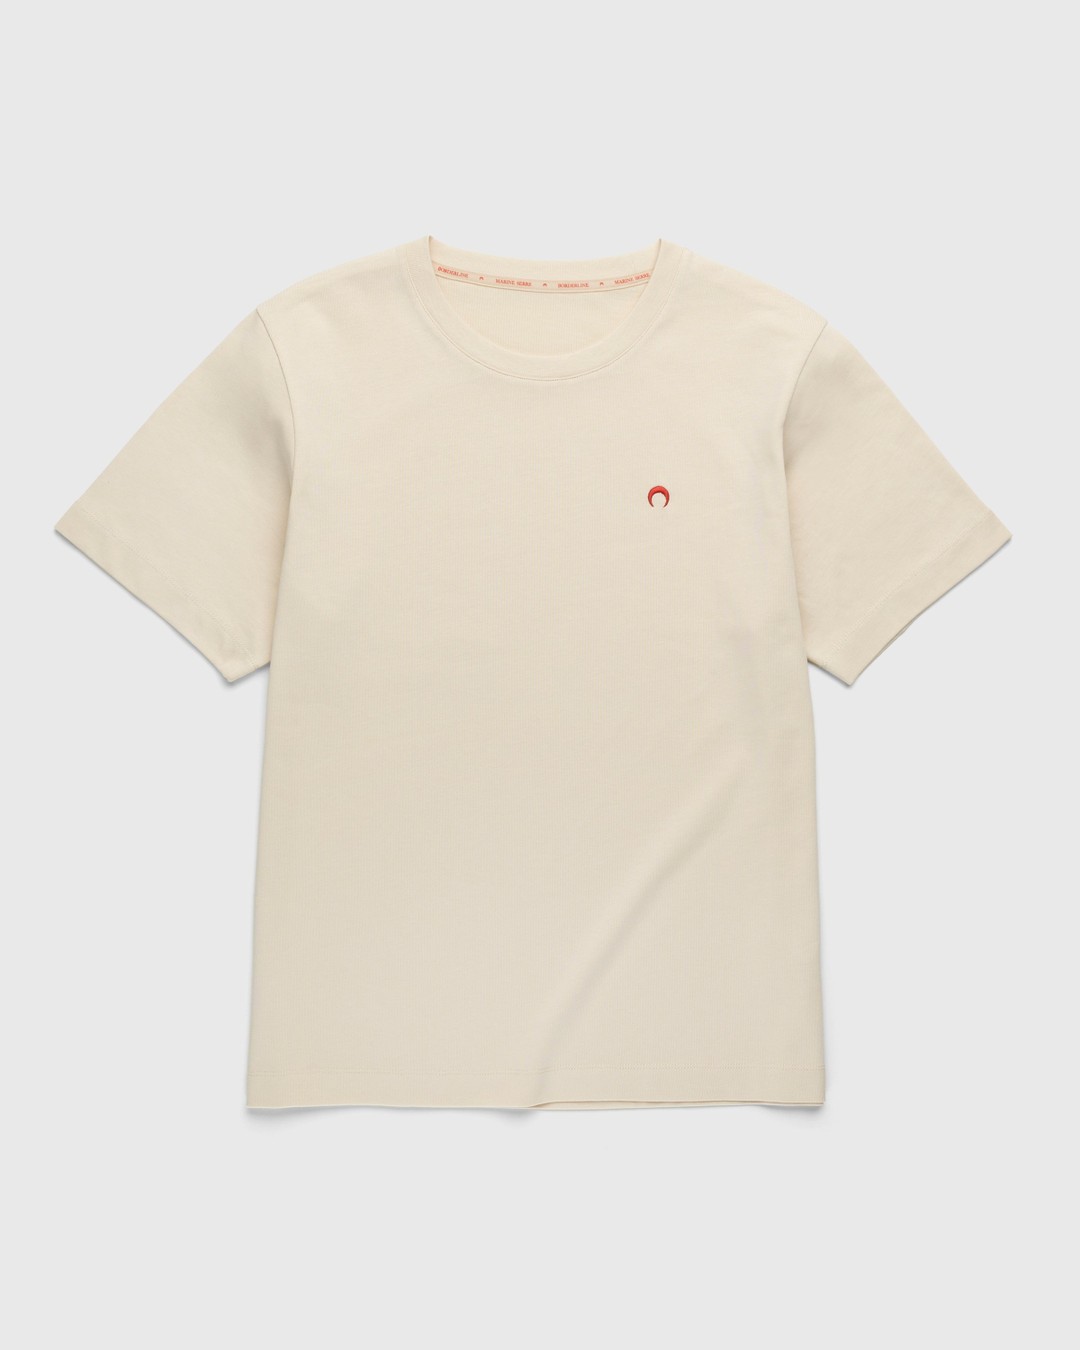 Marine Serre – Organic Cotton T-Shirt Beige - Tops - Beige - Image 1